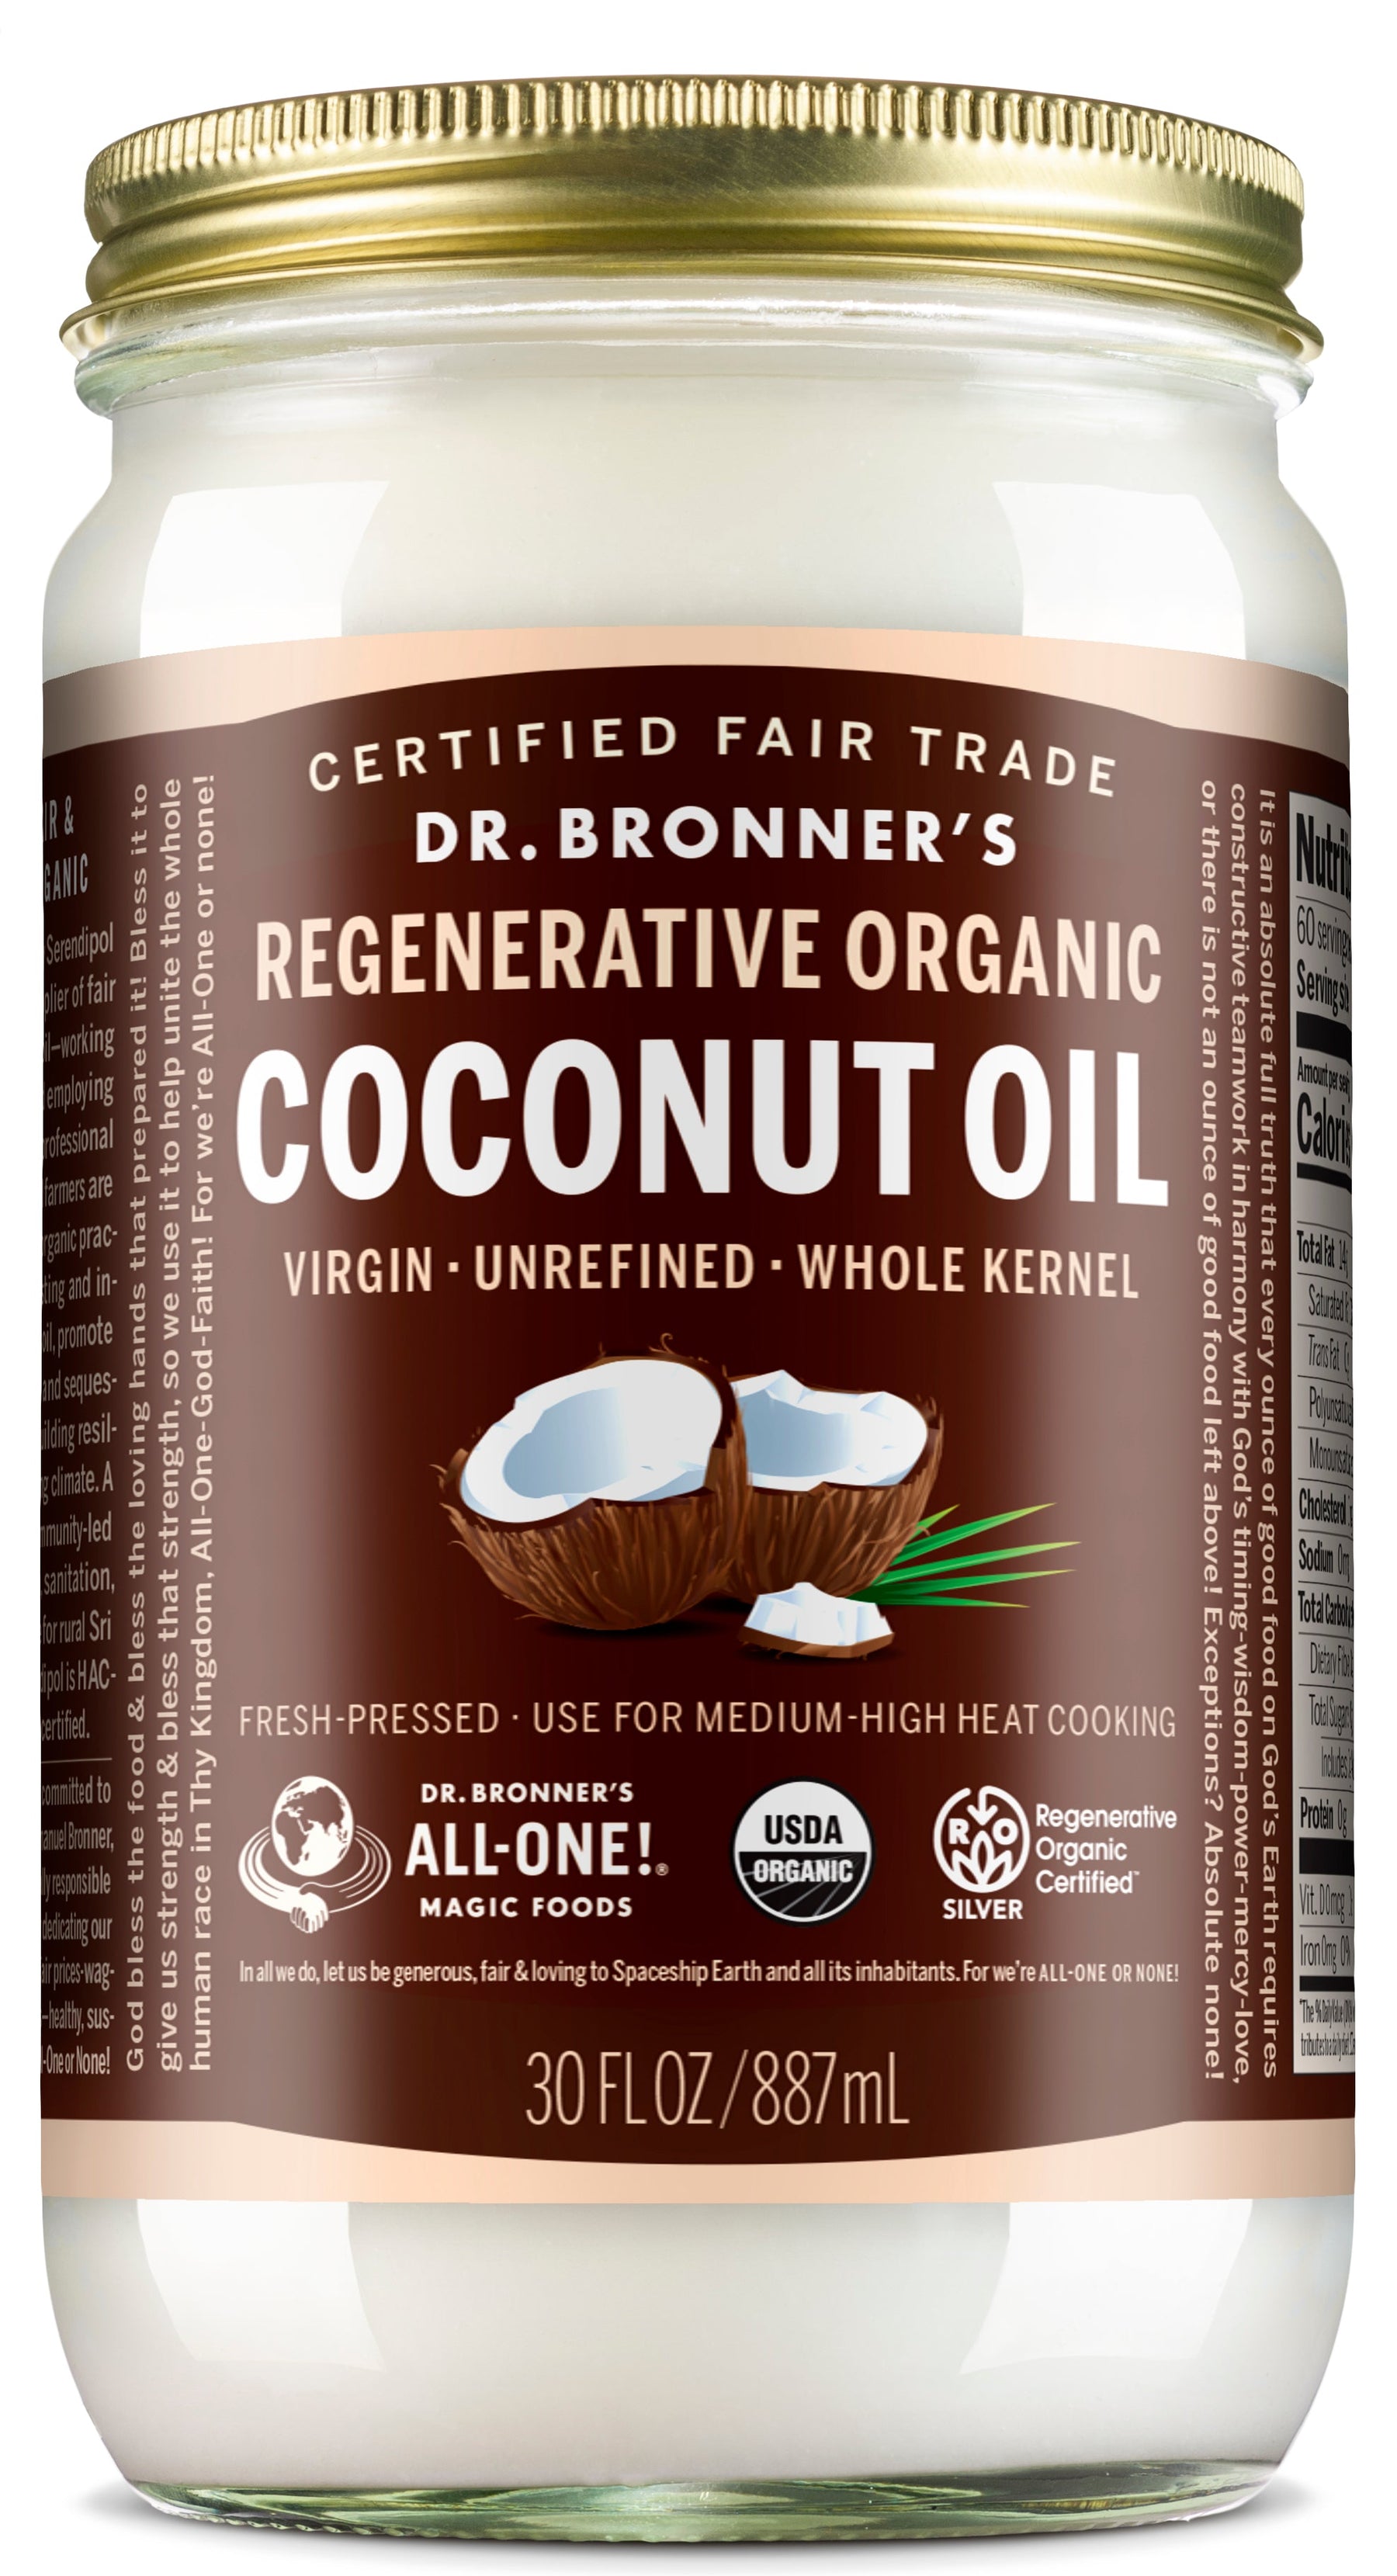 Whole Kernel - Regenerative Organic Coconut Oil - 30 oz - by Dr Bronner's |ProCare Outlet|